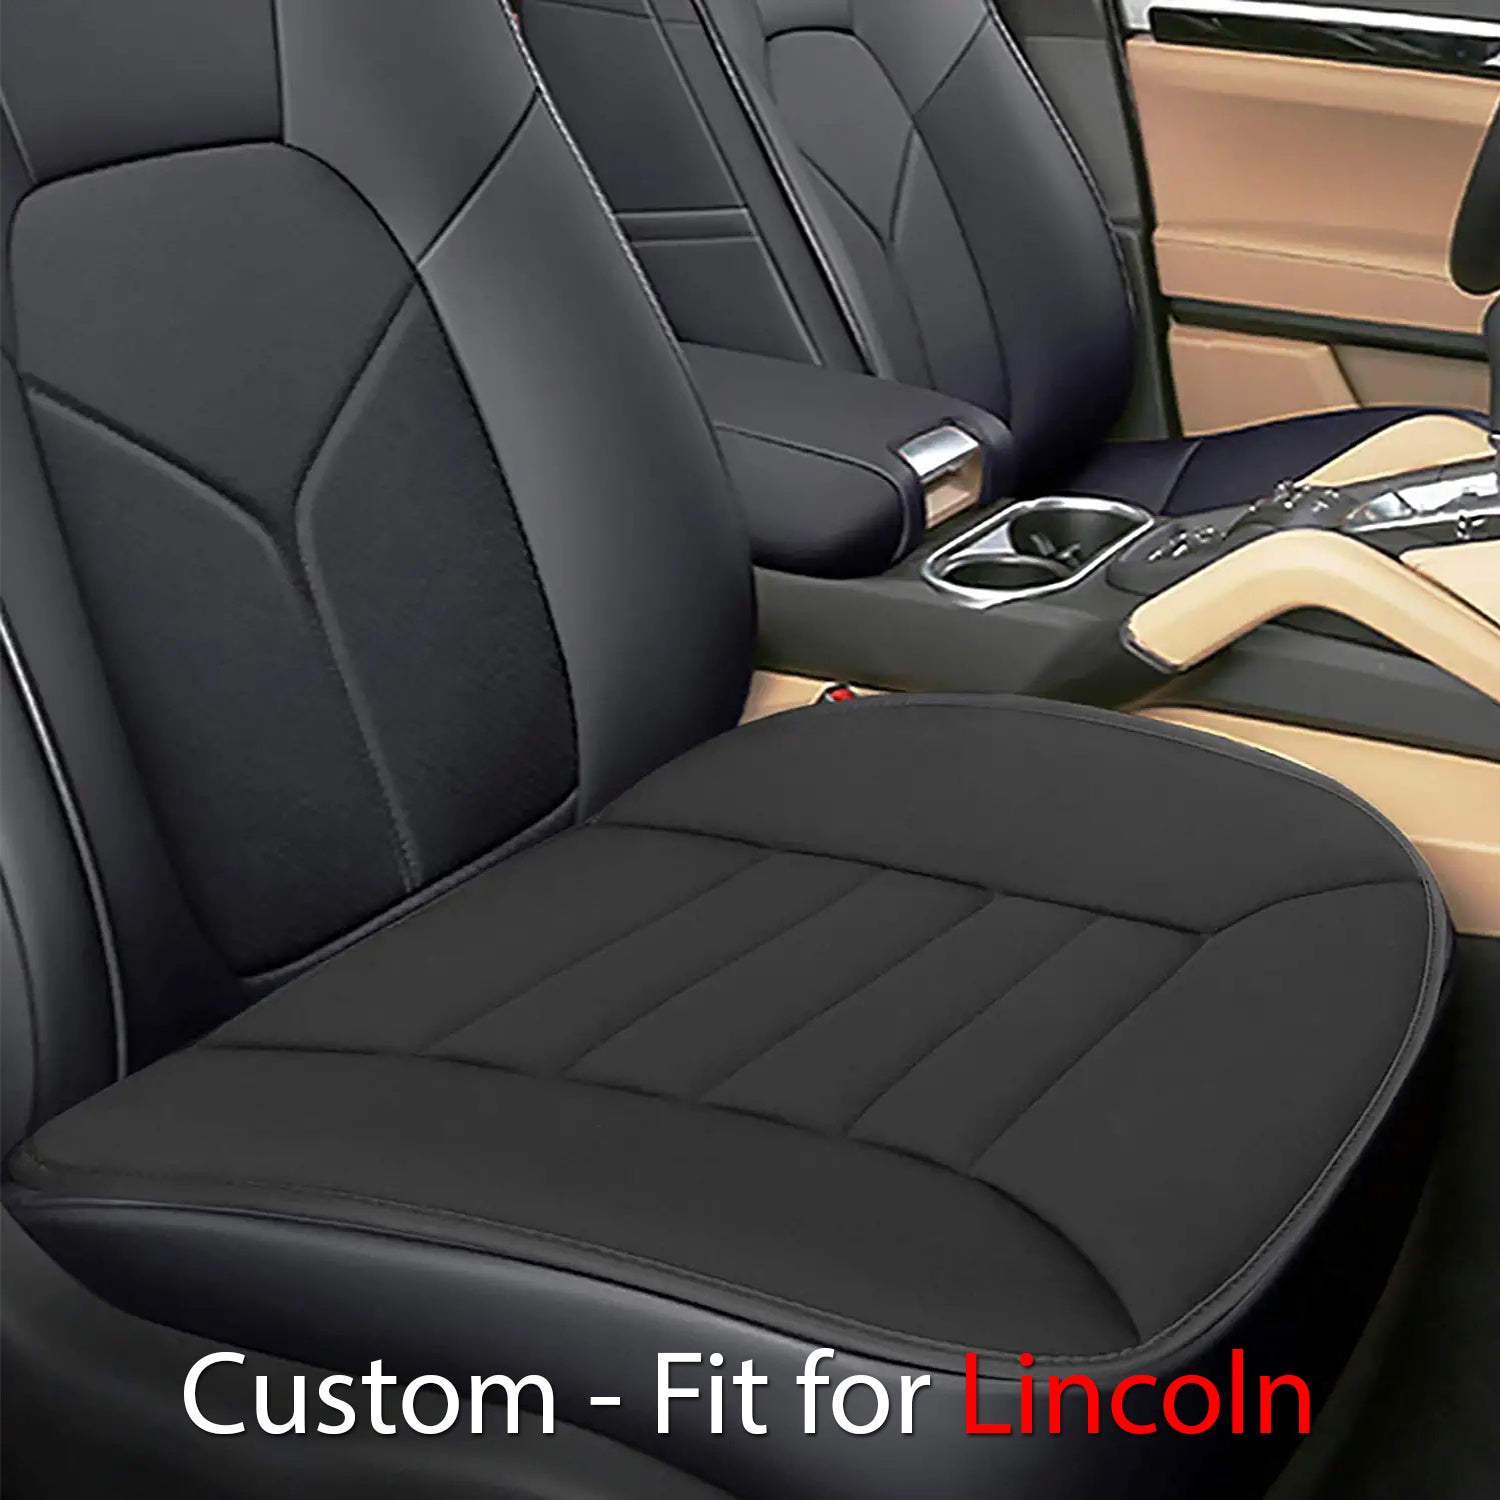 Car Seat Cushion with 1.2inch Comfort Memory Foam, Custom-Fit For Car, Seat Cushion for Car and Office Chair DLLI247